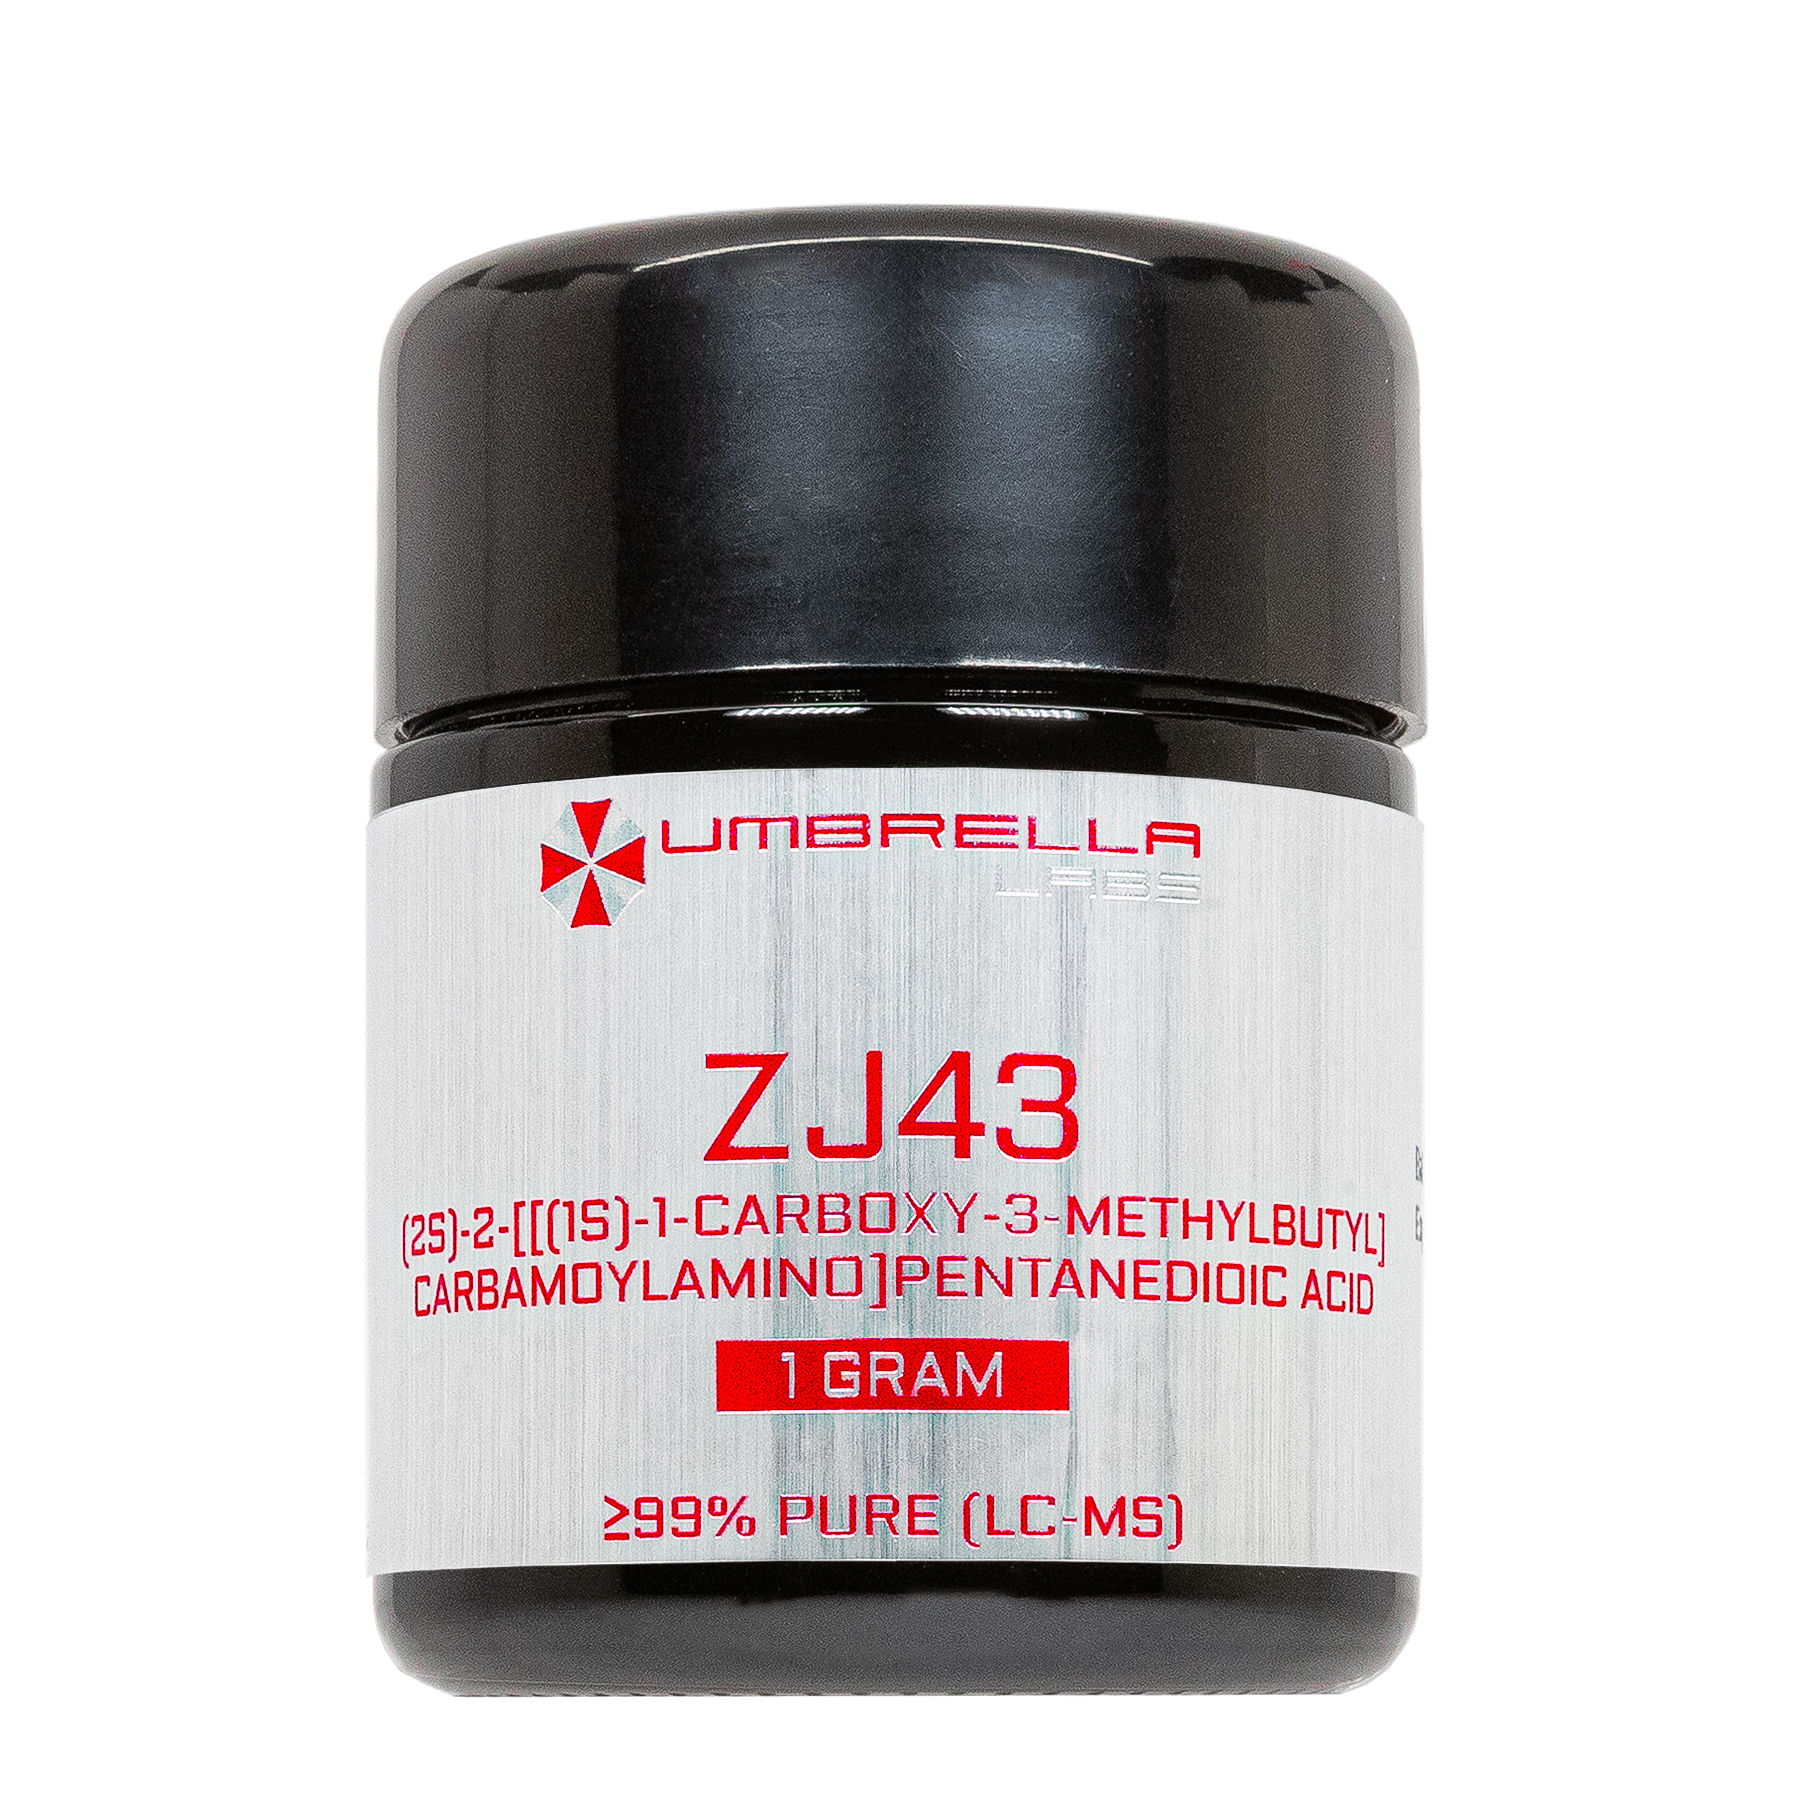 zj43 powder (1 gram)